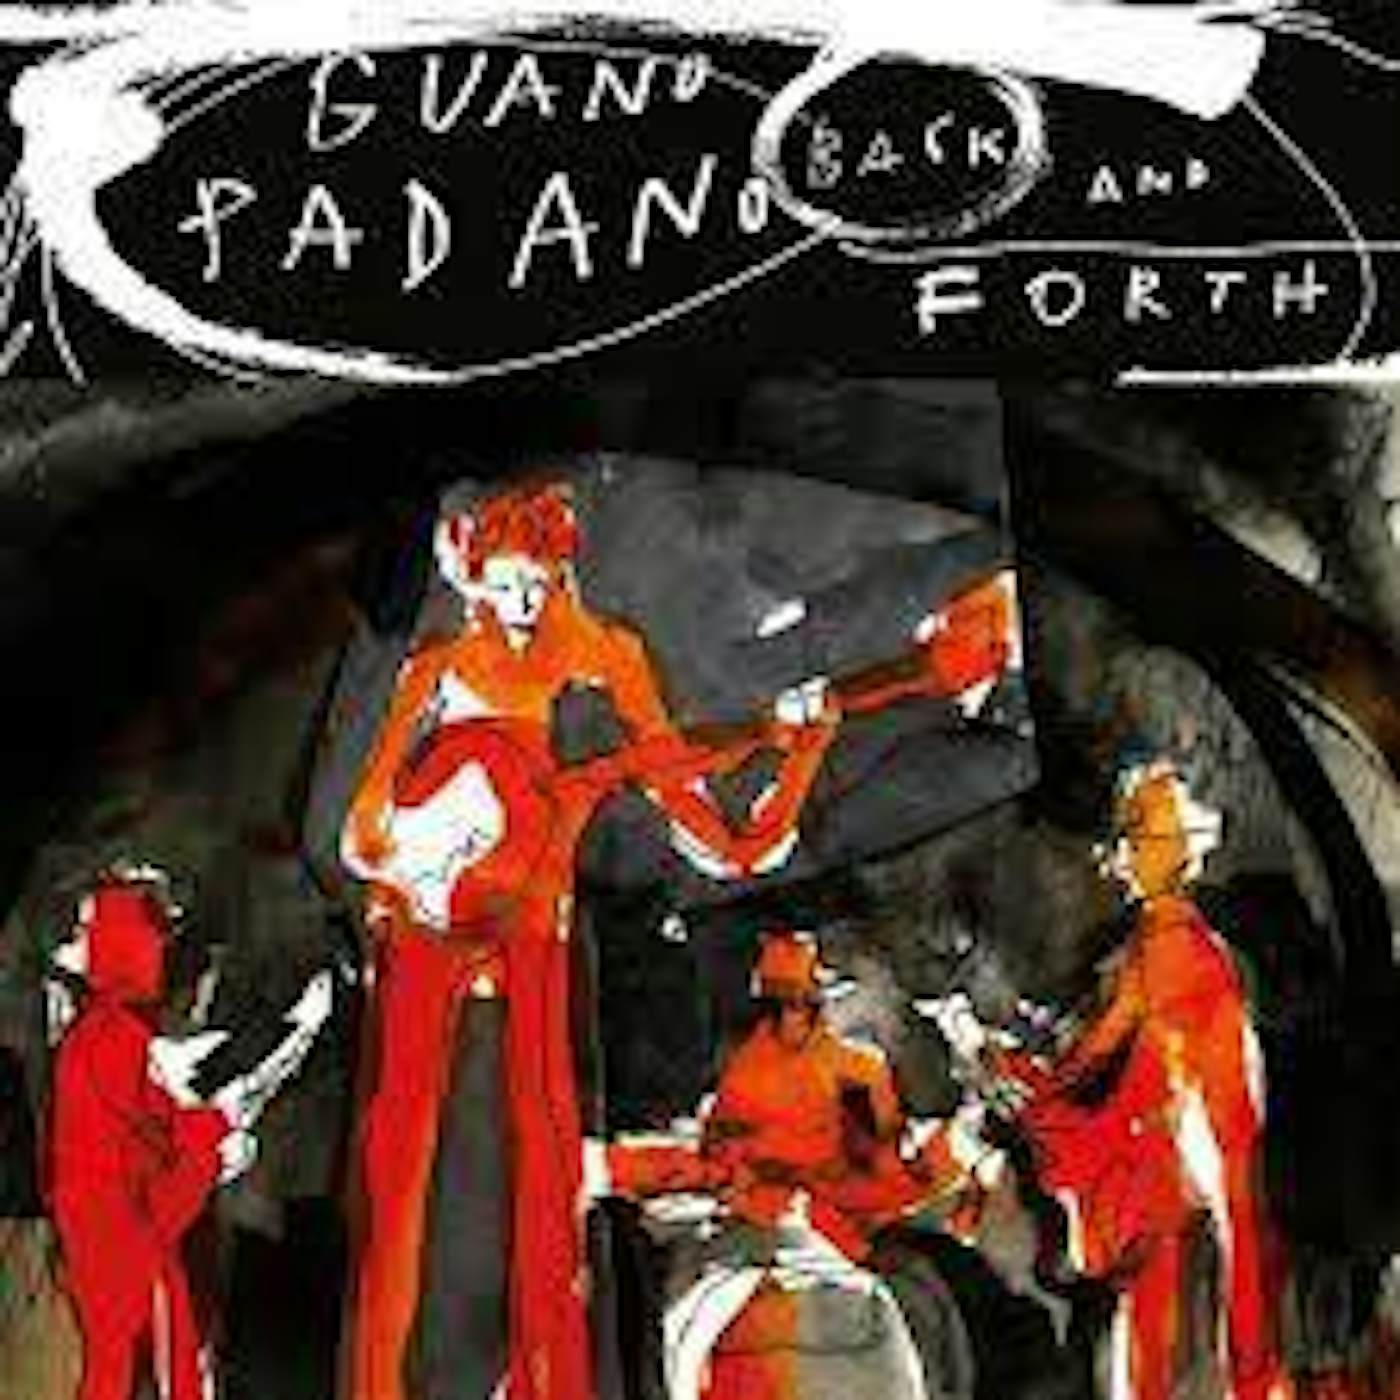 Guano Padano BACK & FORTH CD